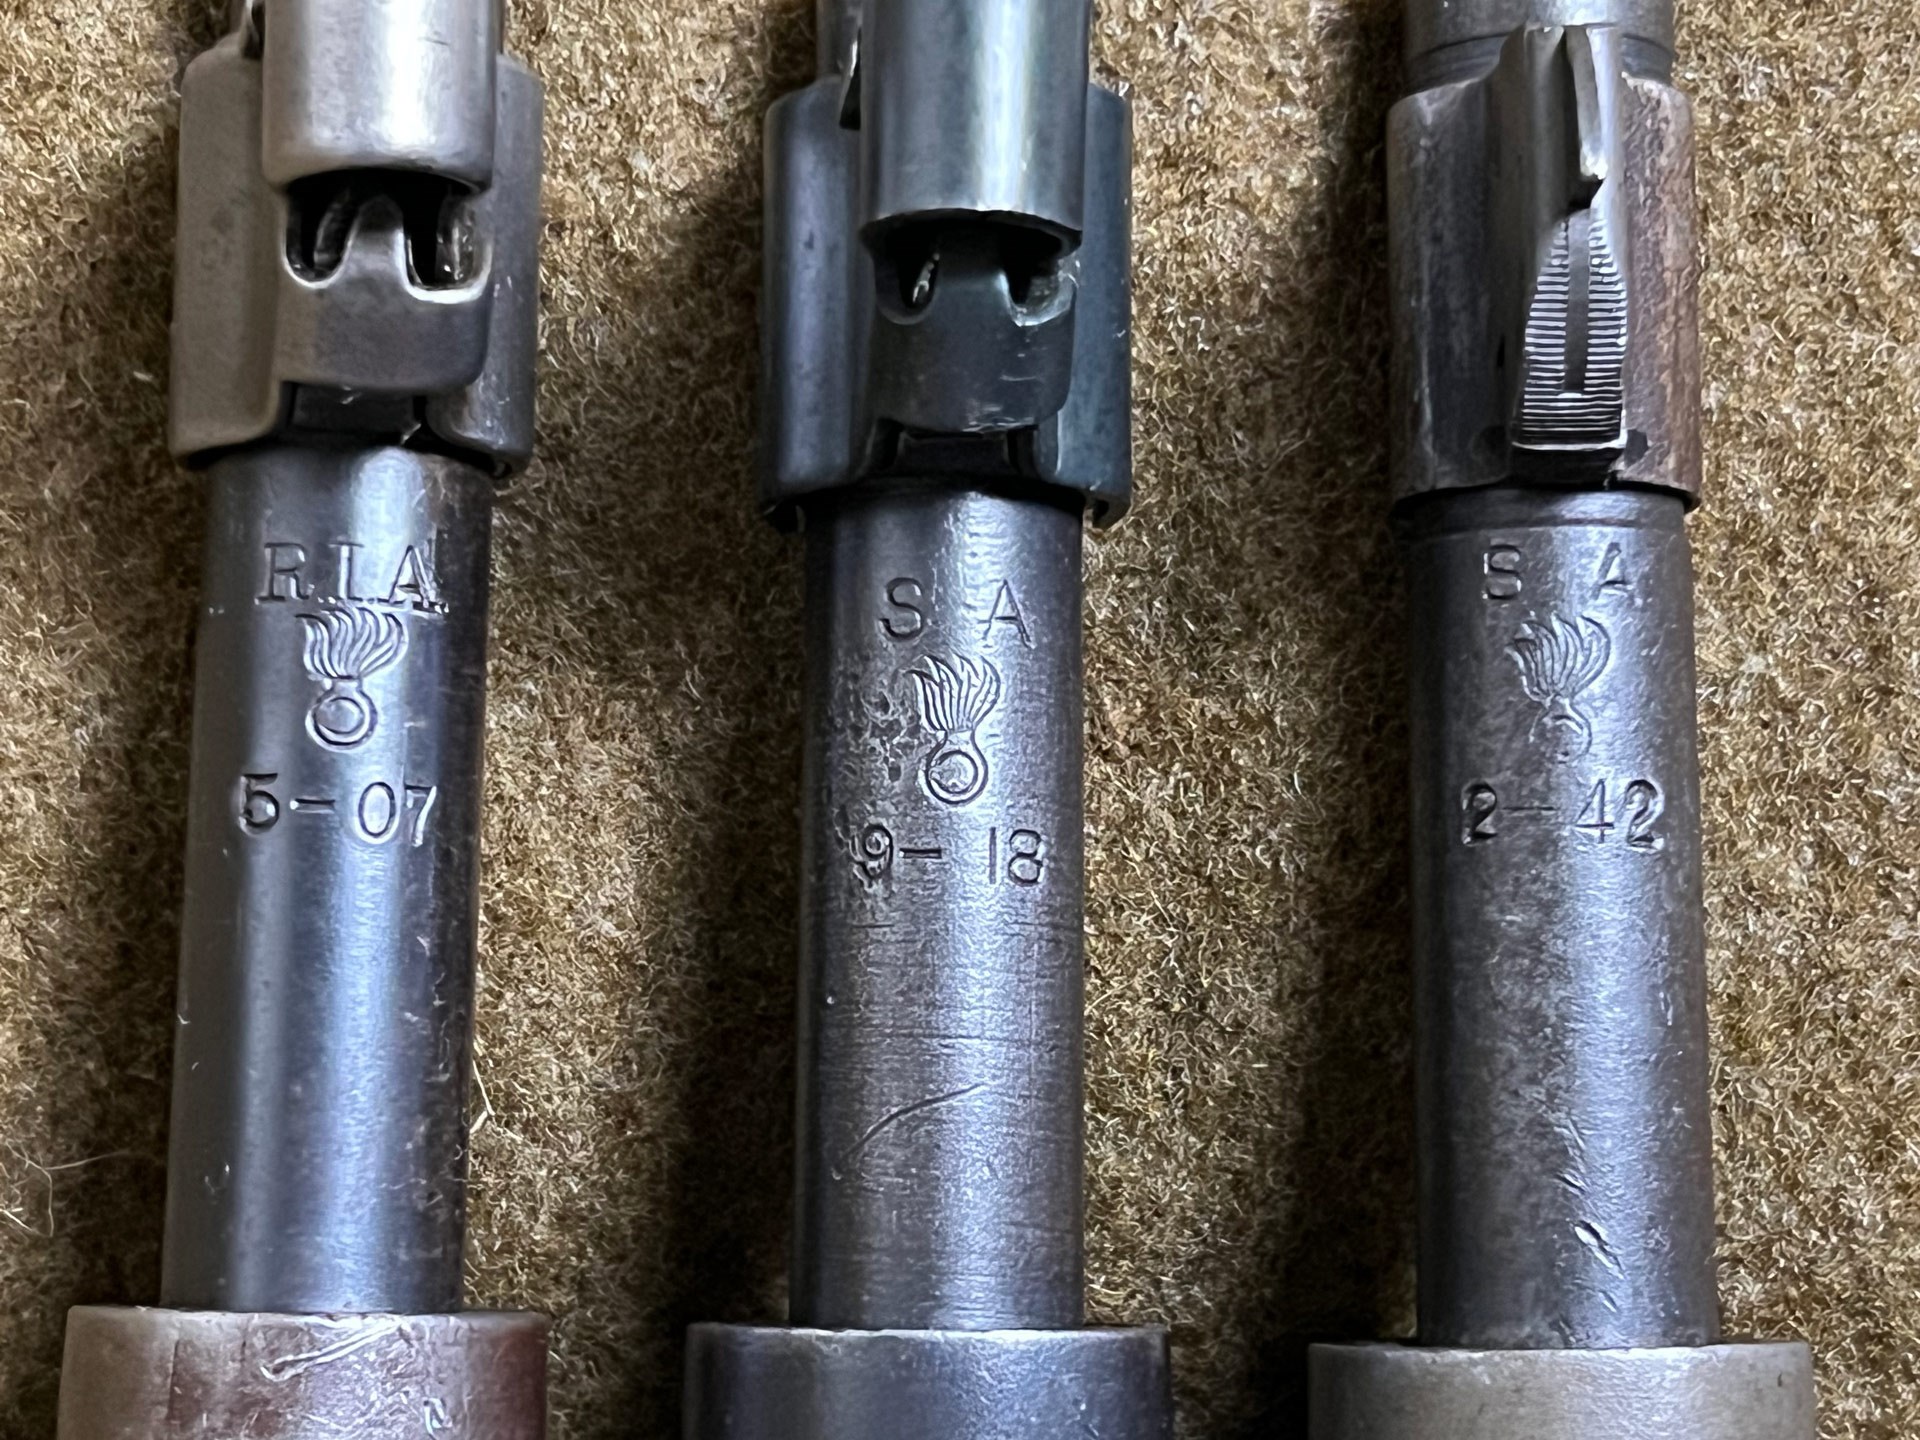 Barrel markings on military surplus rifles